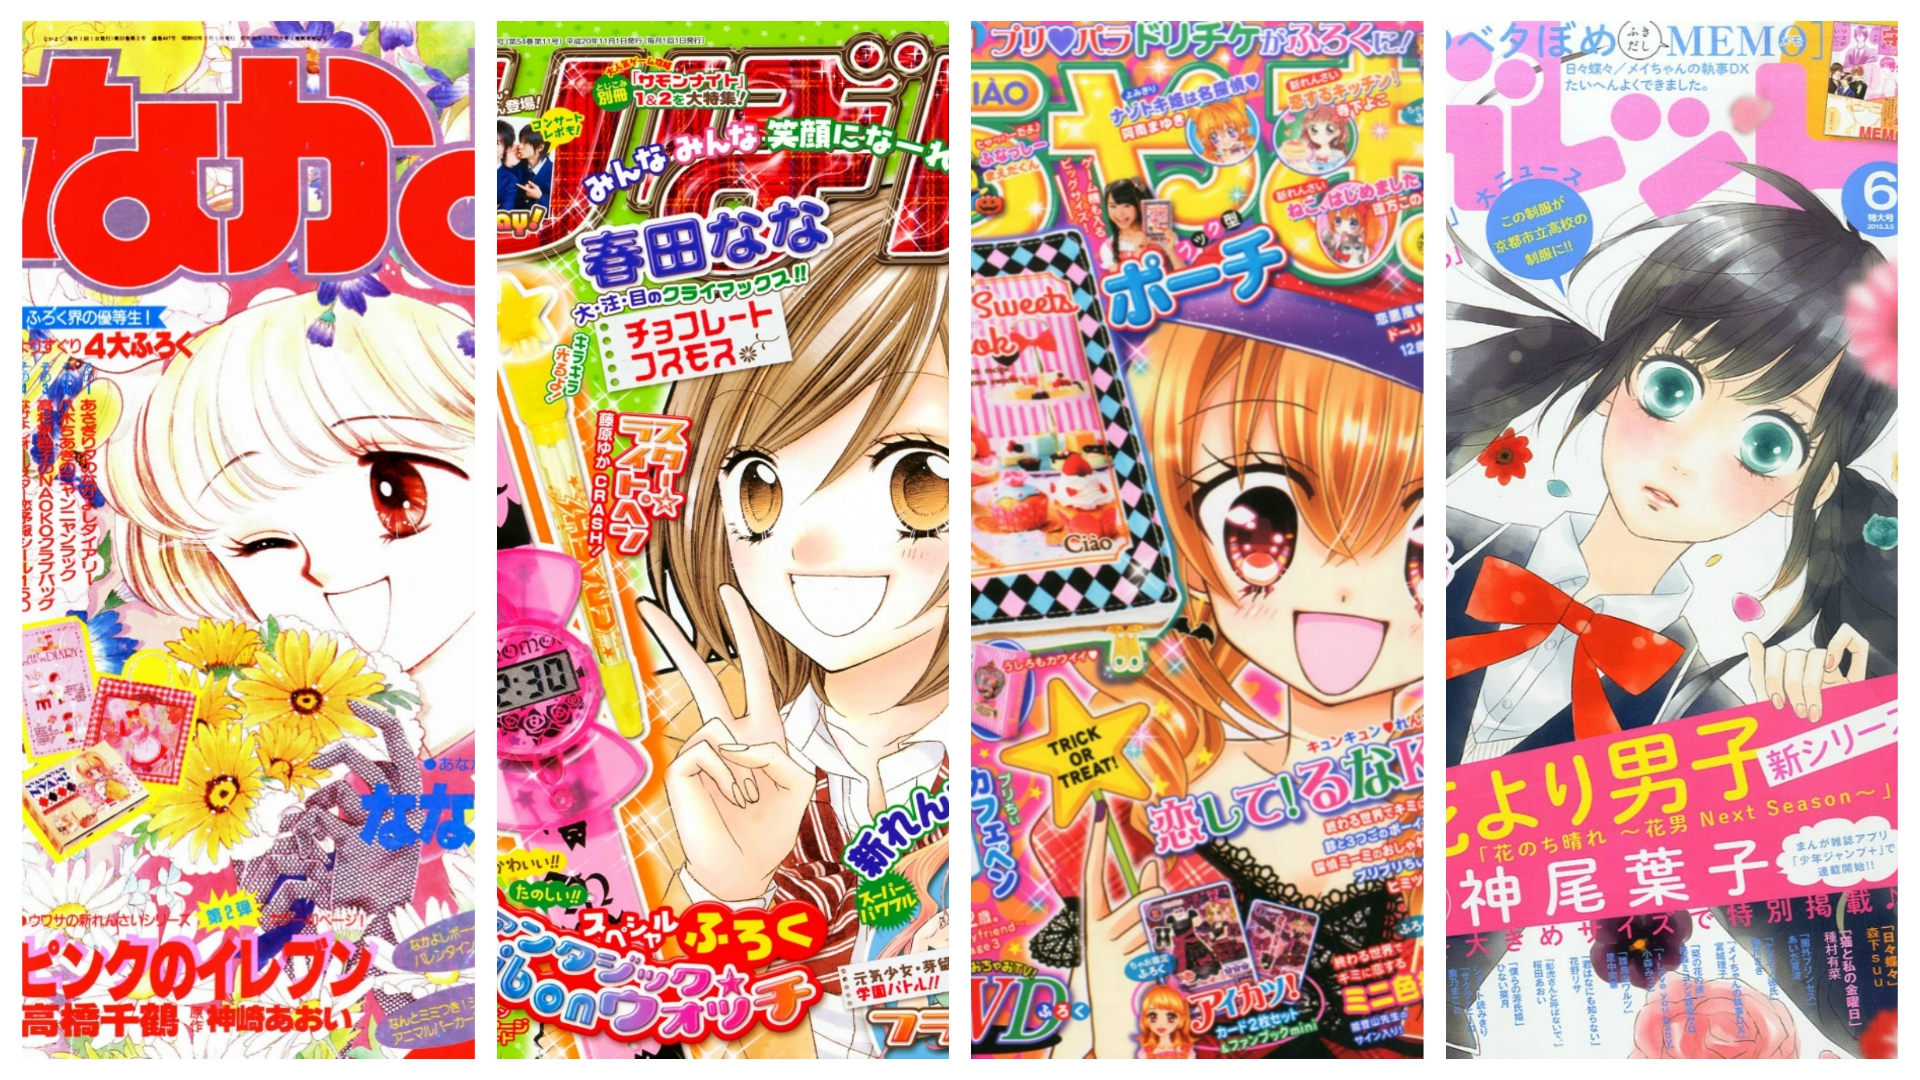 Le riviste dello shōjo manga: Nakayoshi, Ribon, Ciao, Margaret